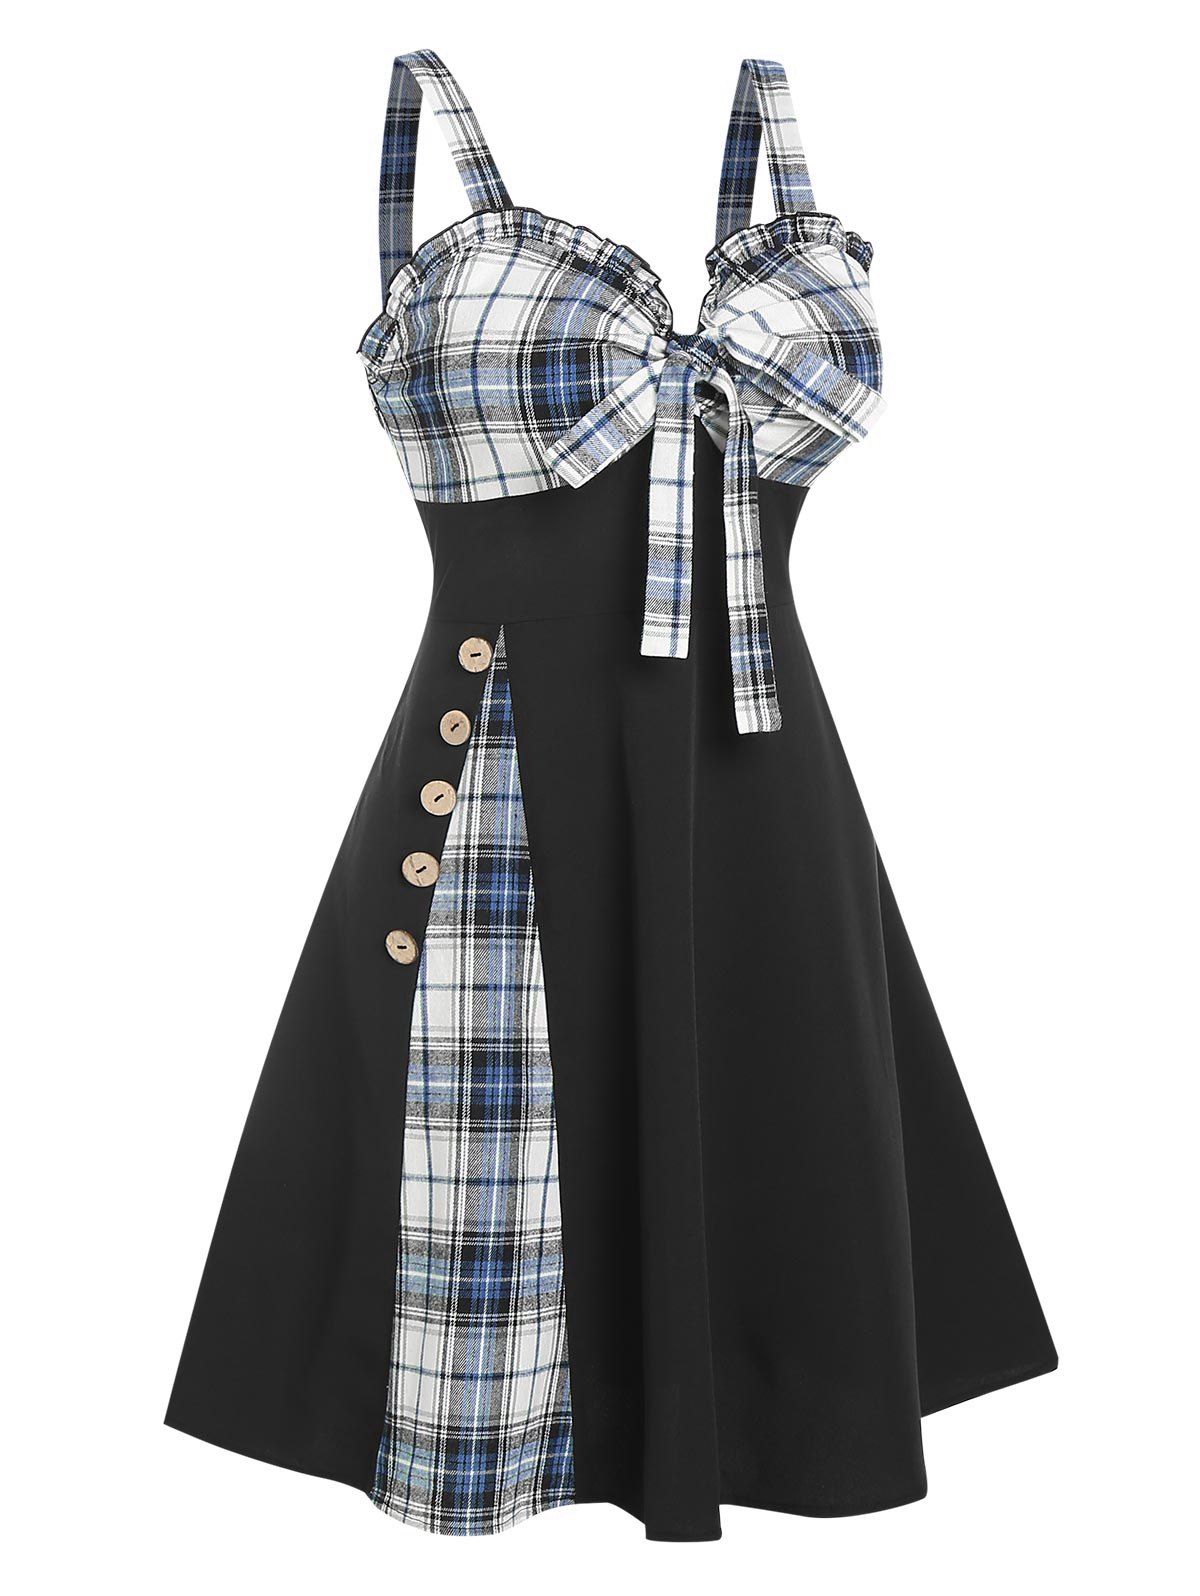 Plaid Print Godet Dress Bowknot Ruffles Mini Dress Mock Button Casual Flare Dress - BLUE M